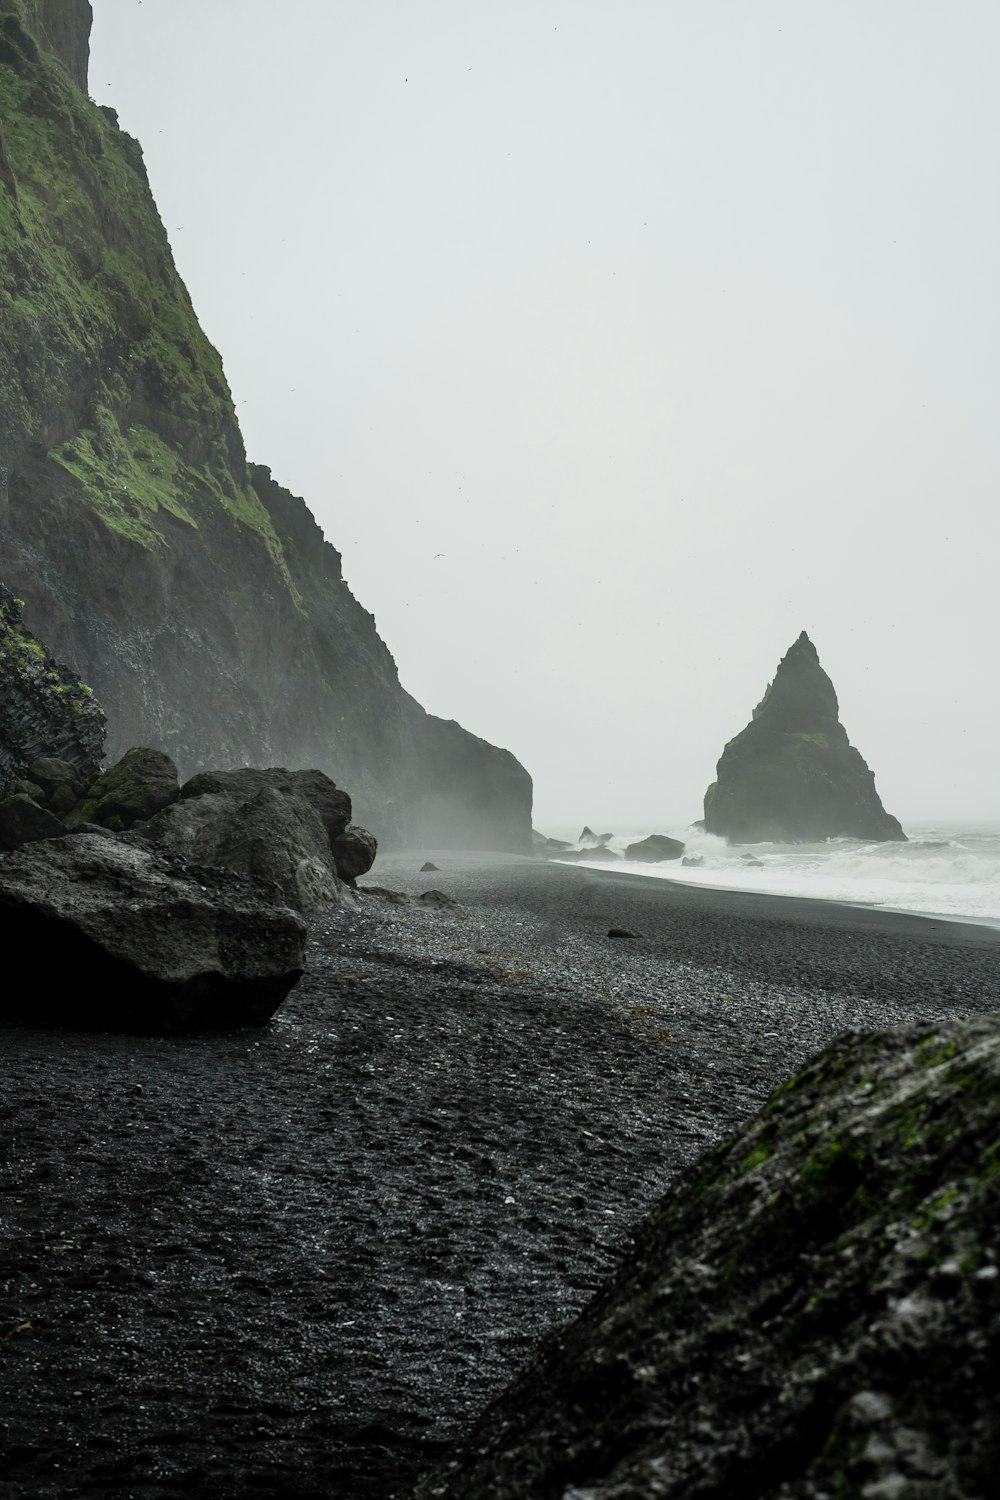 landscape photo of black rock formation on body of water near seashore